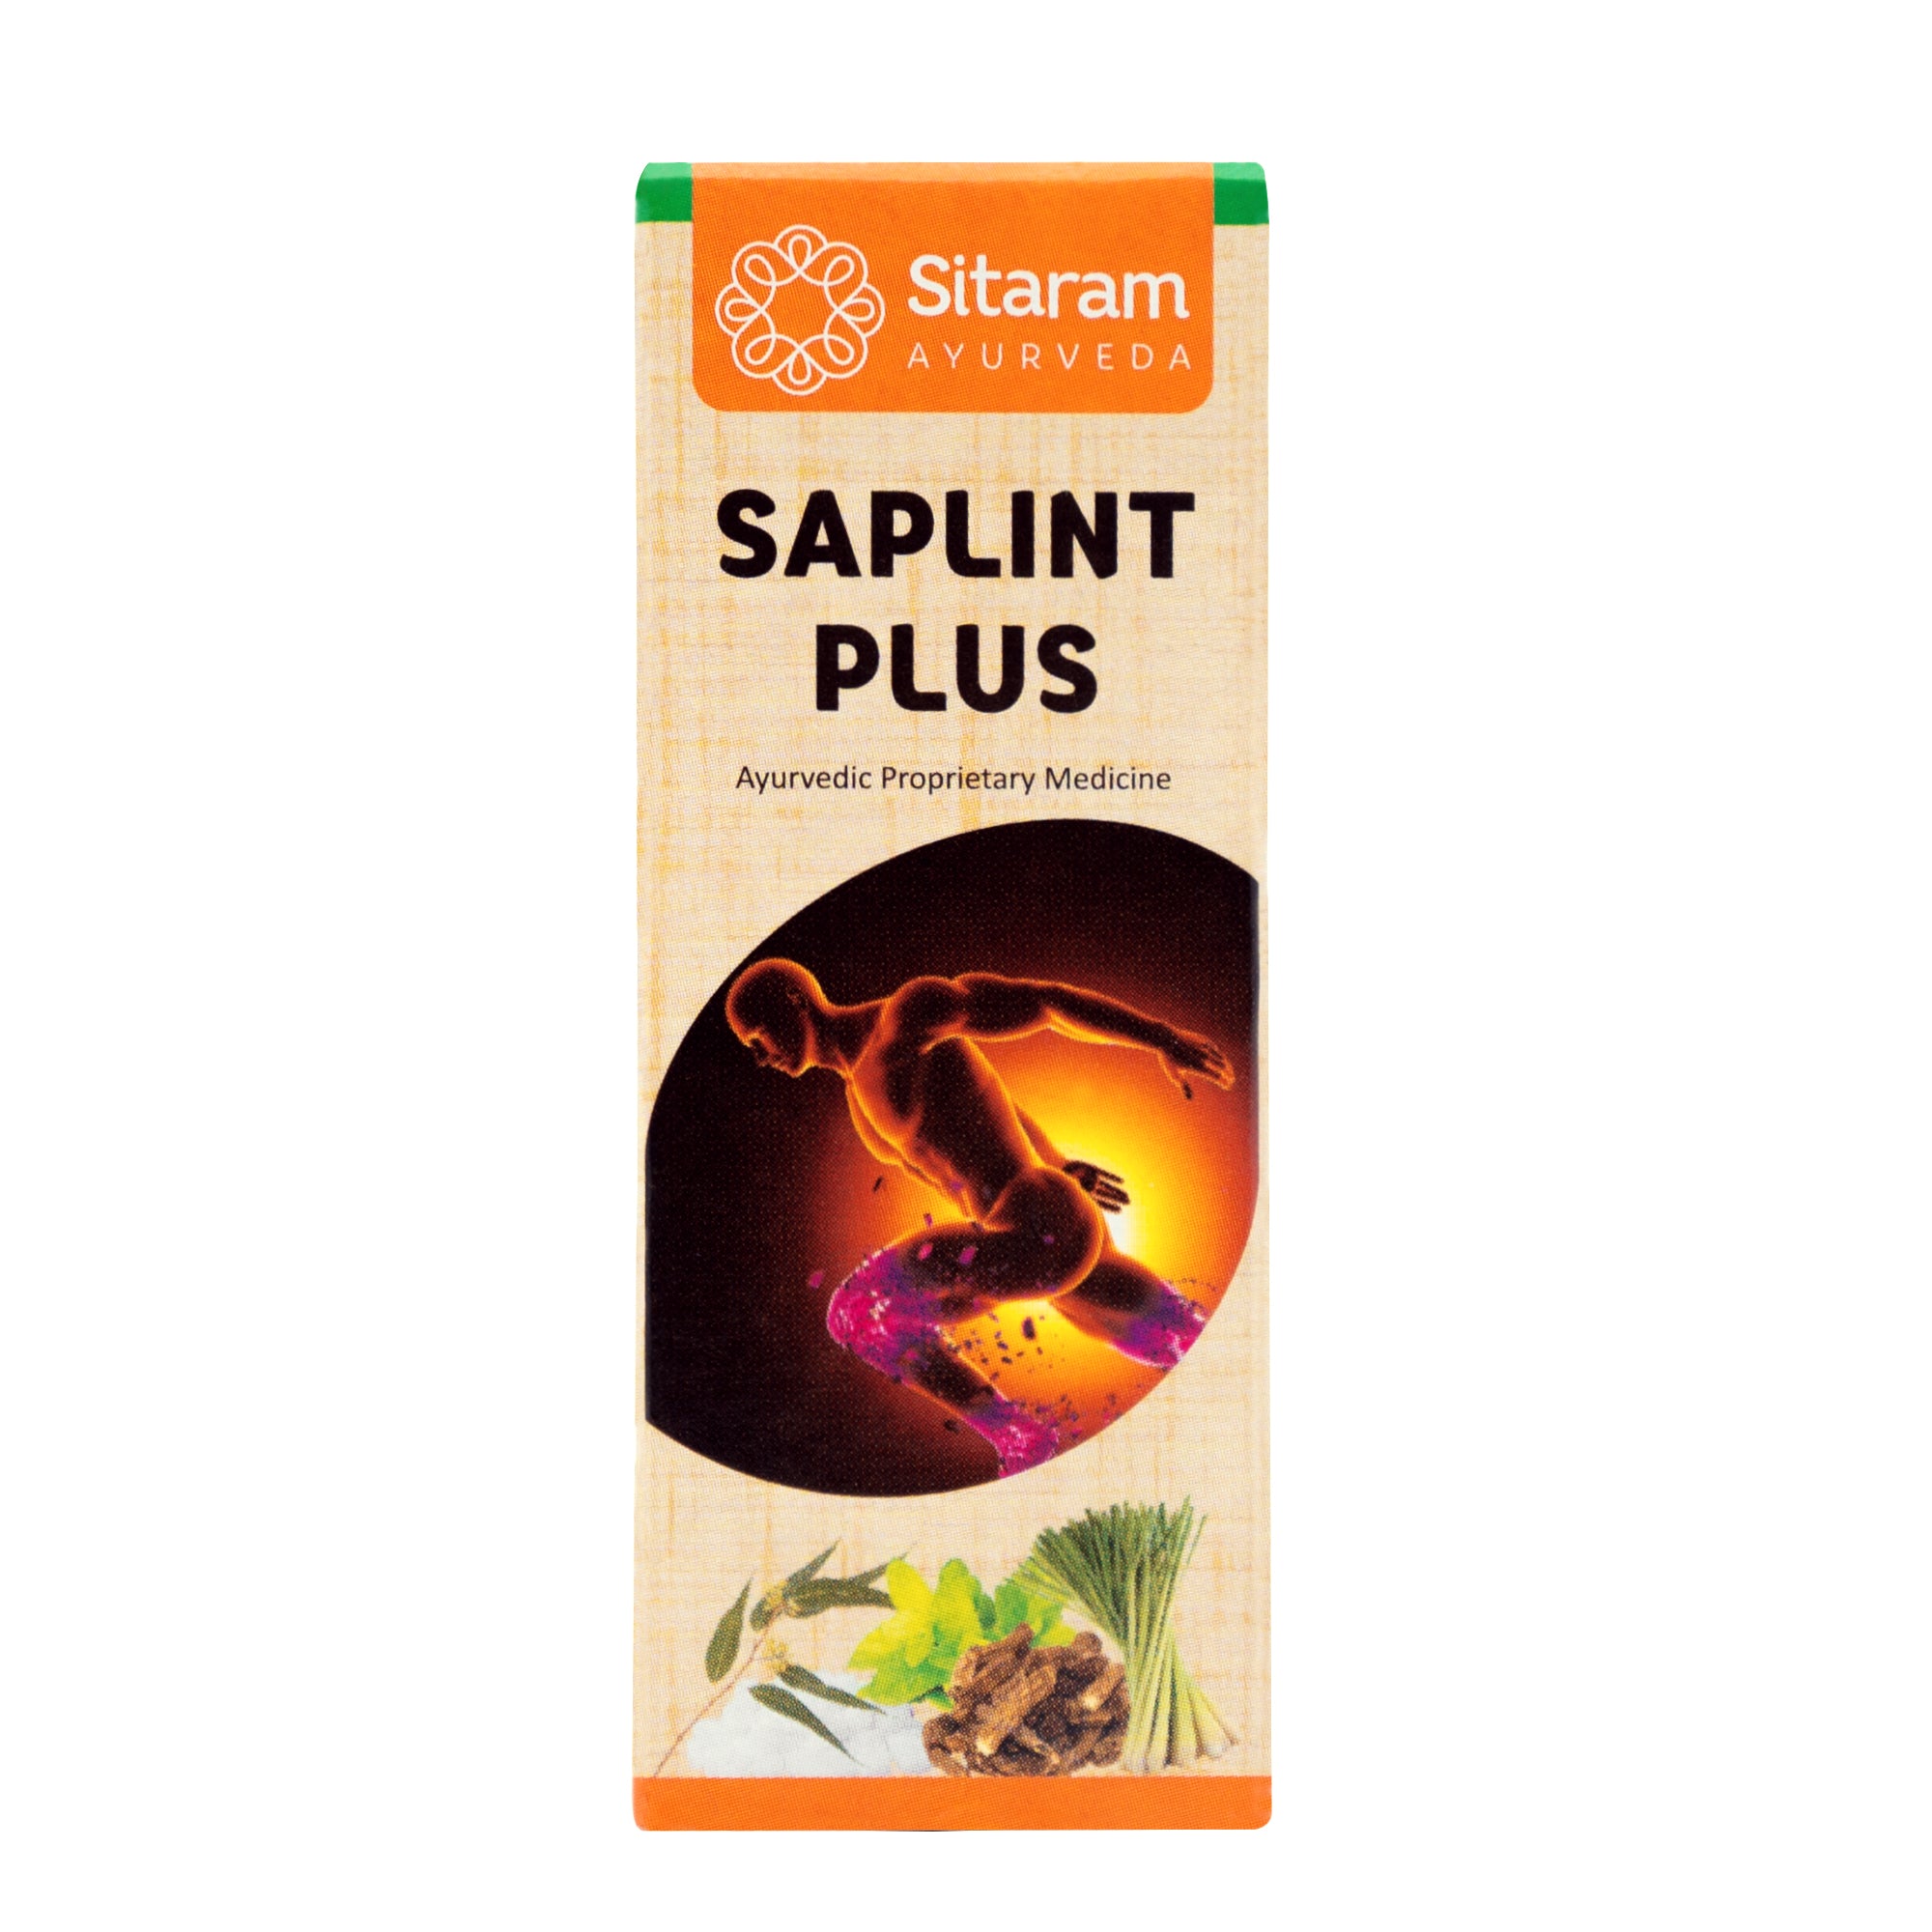 Sitaram Ayurveda Saplint Plus 30Ml - (Pack of 2)(Prescription Medication)